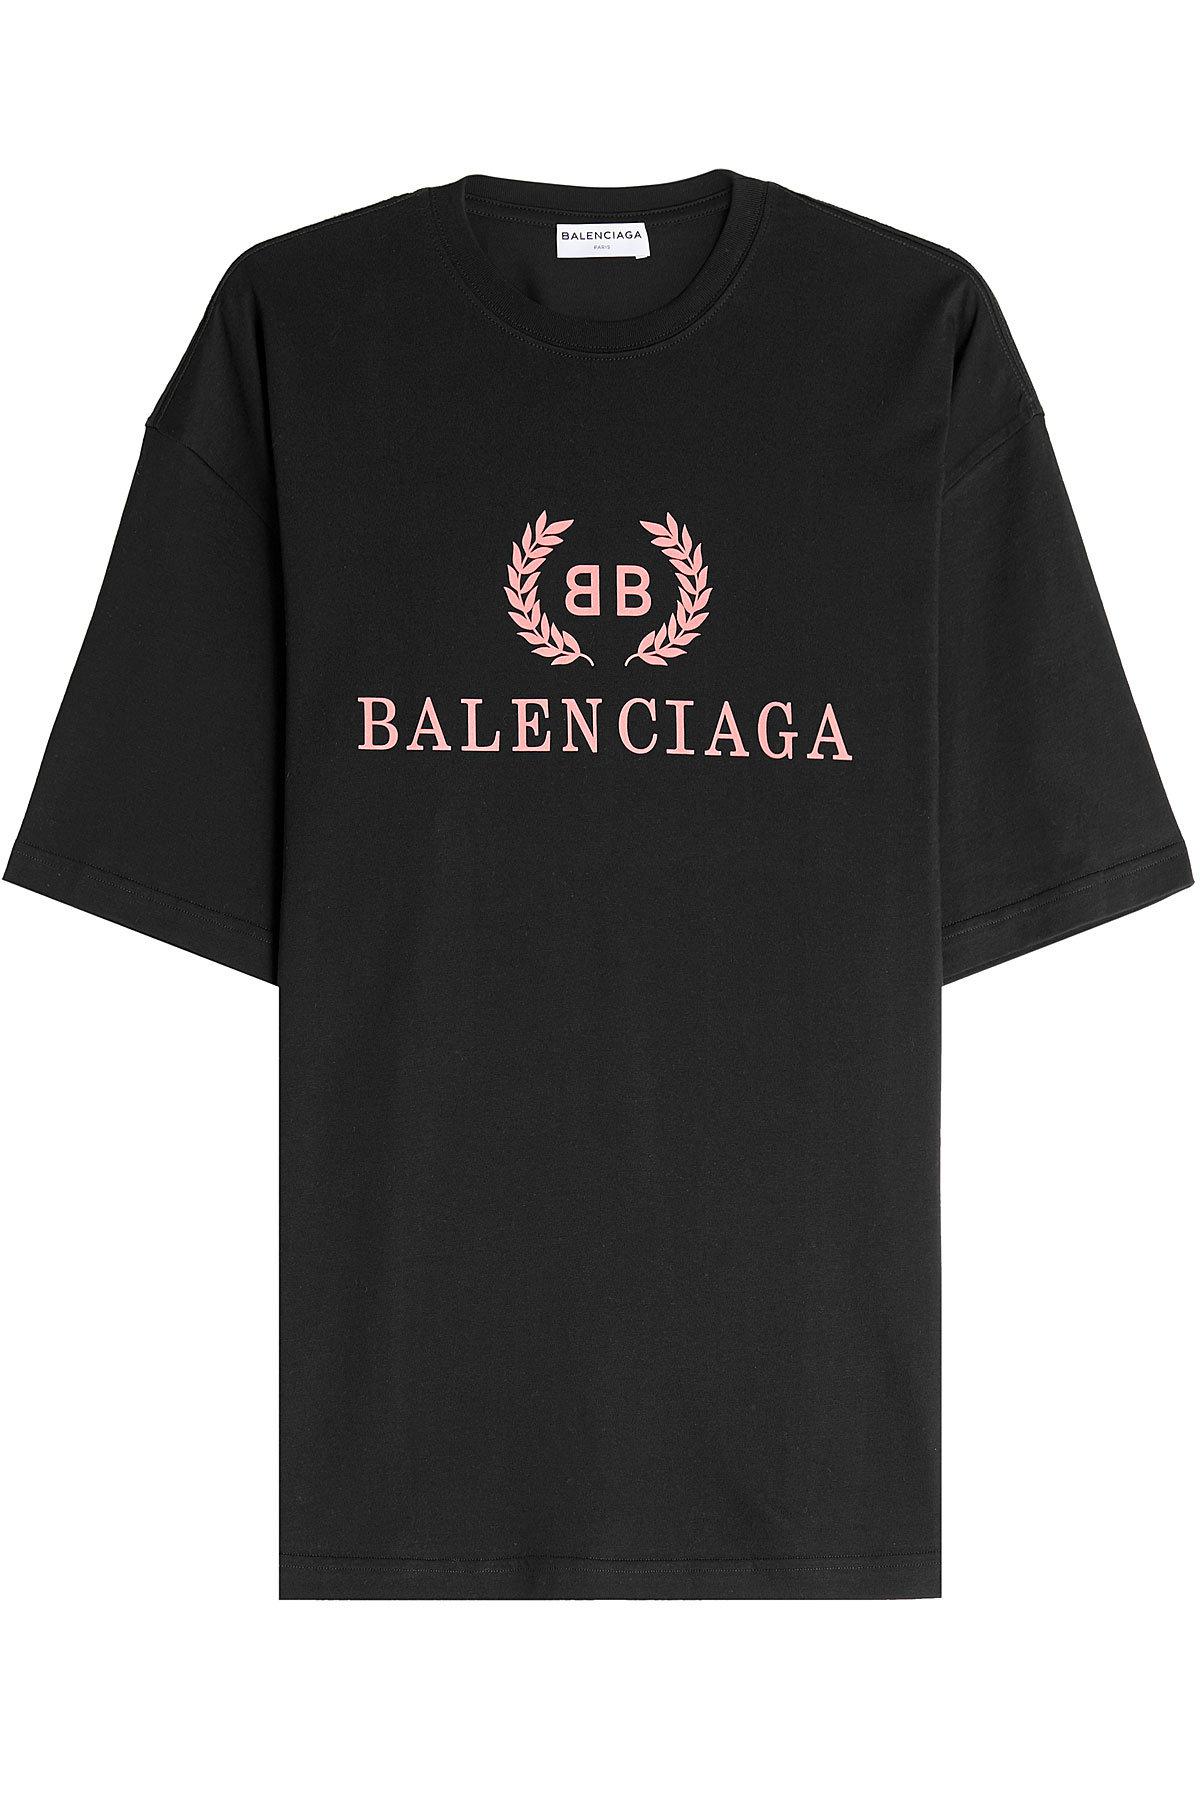  Balenciaga  Logo Cotton T  shirt  in Black Lyst